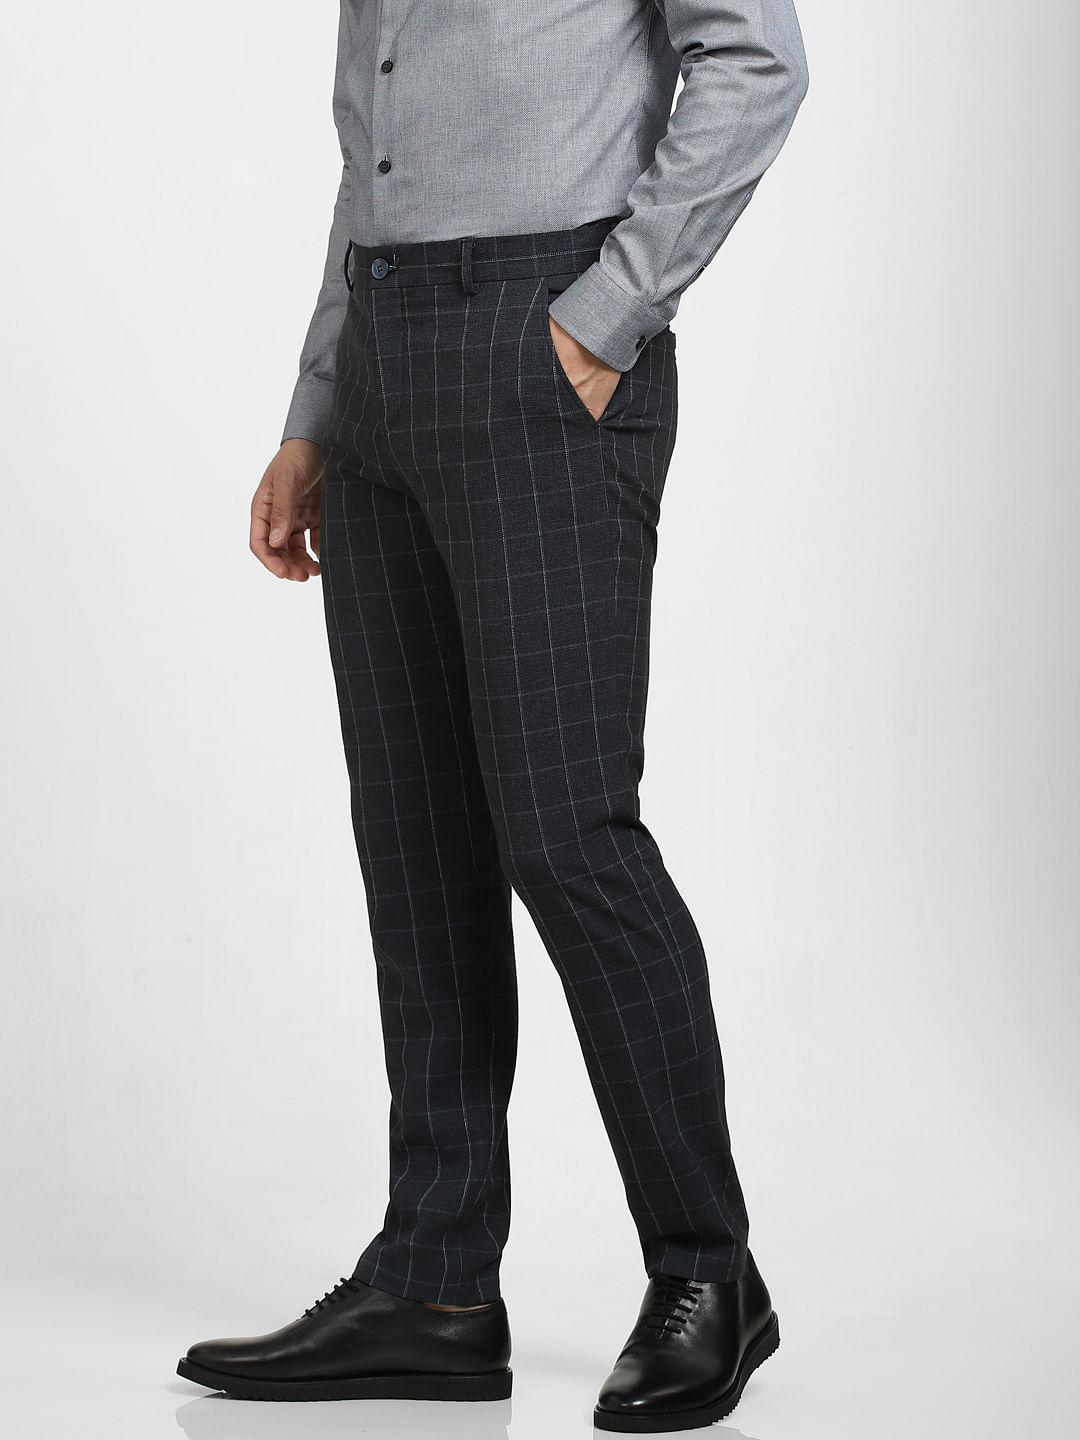 Reiss Aintree Slim Fit Wool Linen Check Suit Trousers, Indigo/Multi, 28R